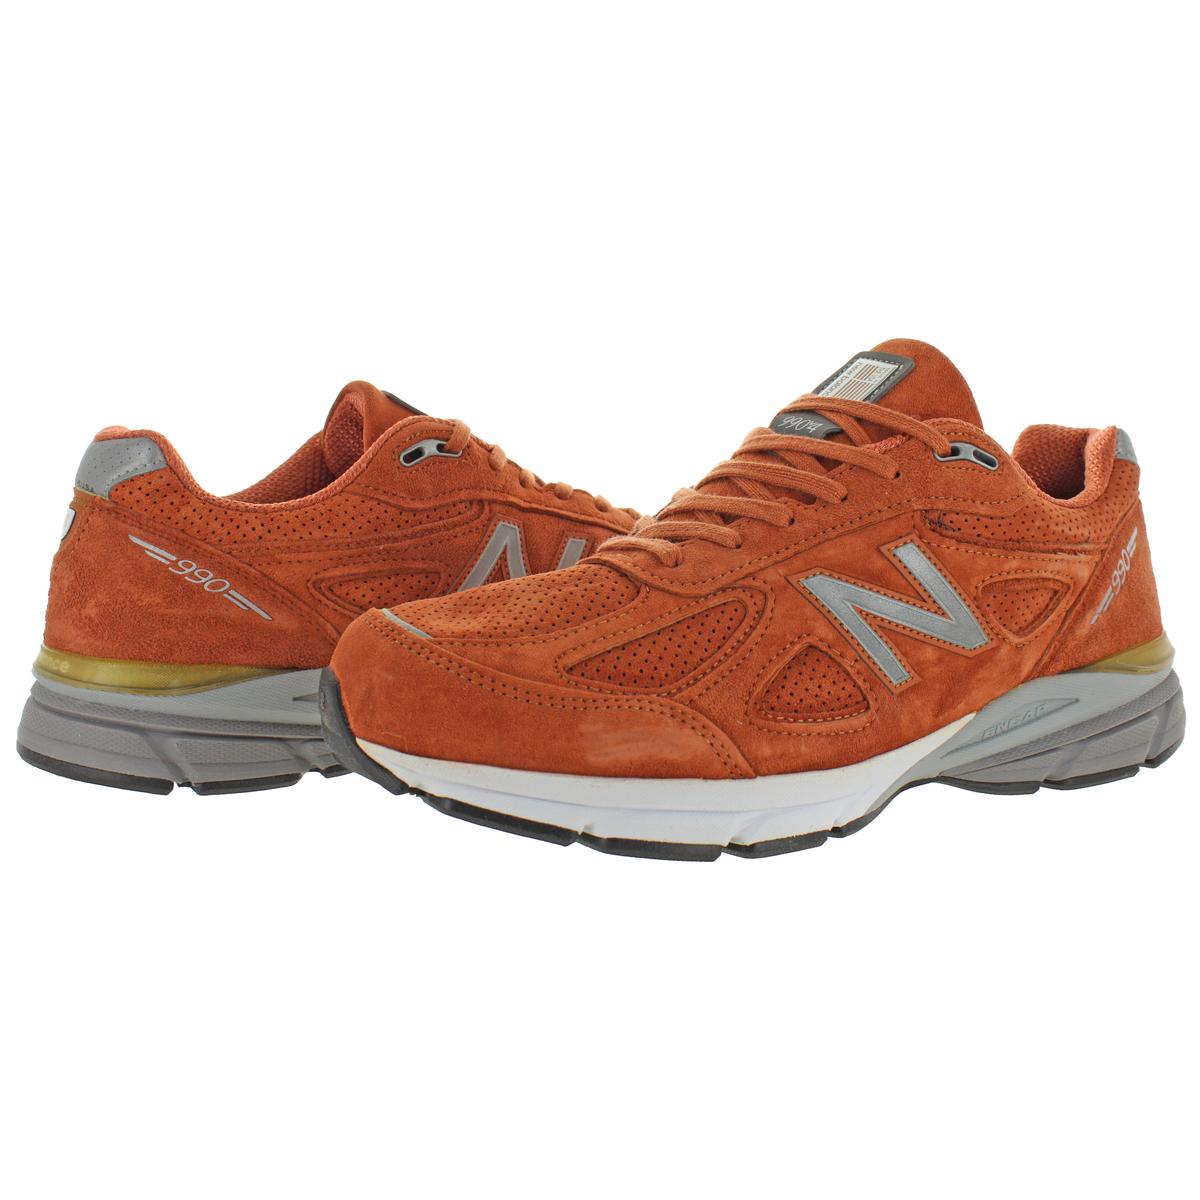 New Balance Mens 990 v4 Orange Running Shoes Sneakers 12 Medium (D ...